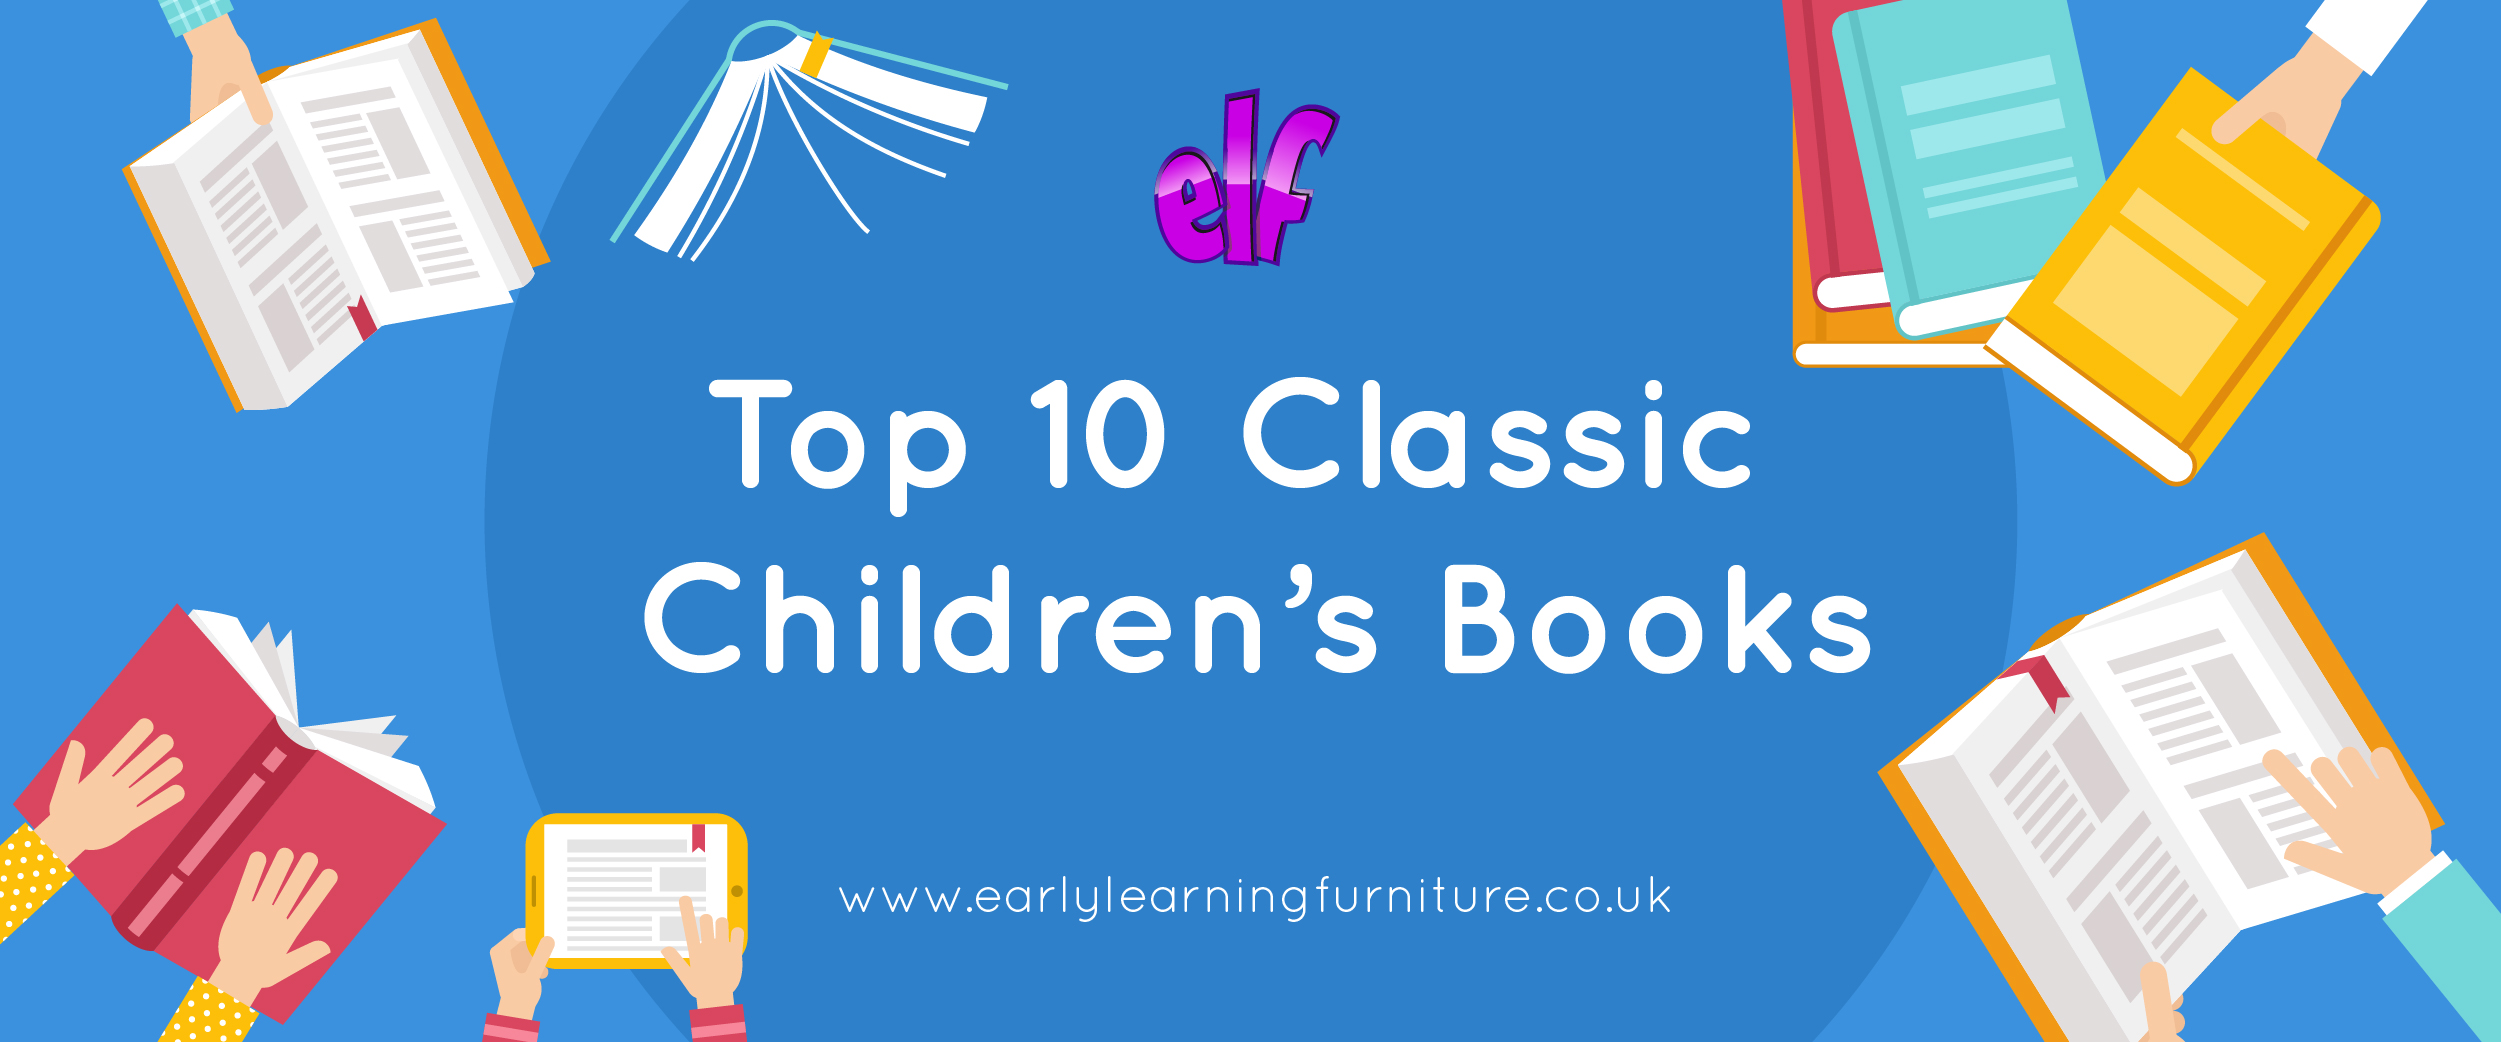 Top 10 Classic Children’s Books 